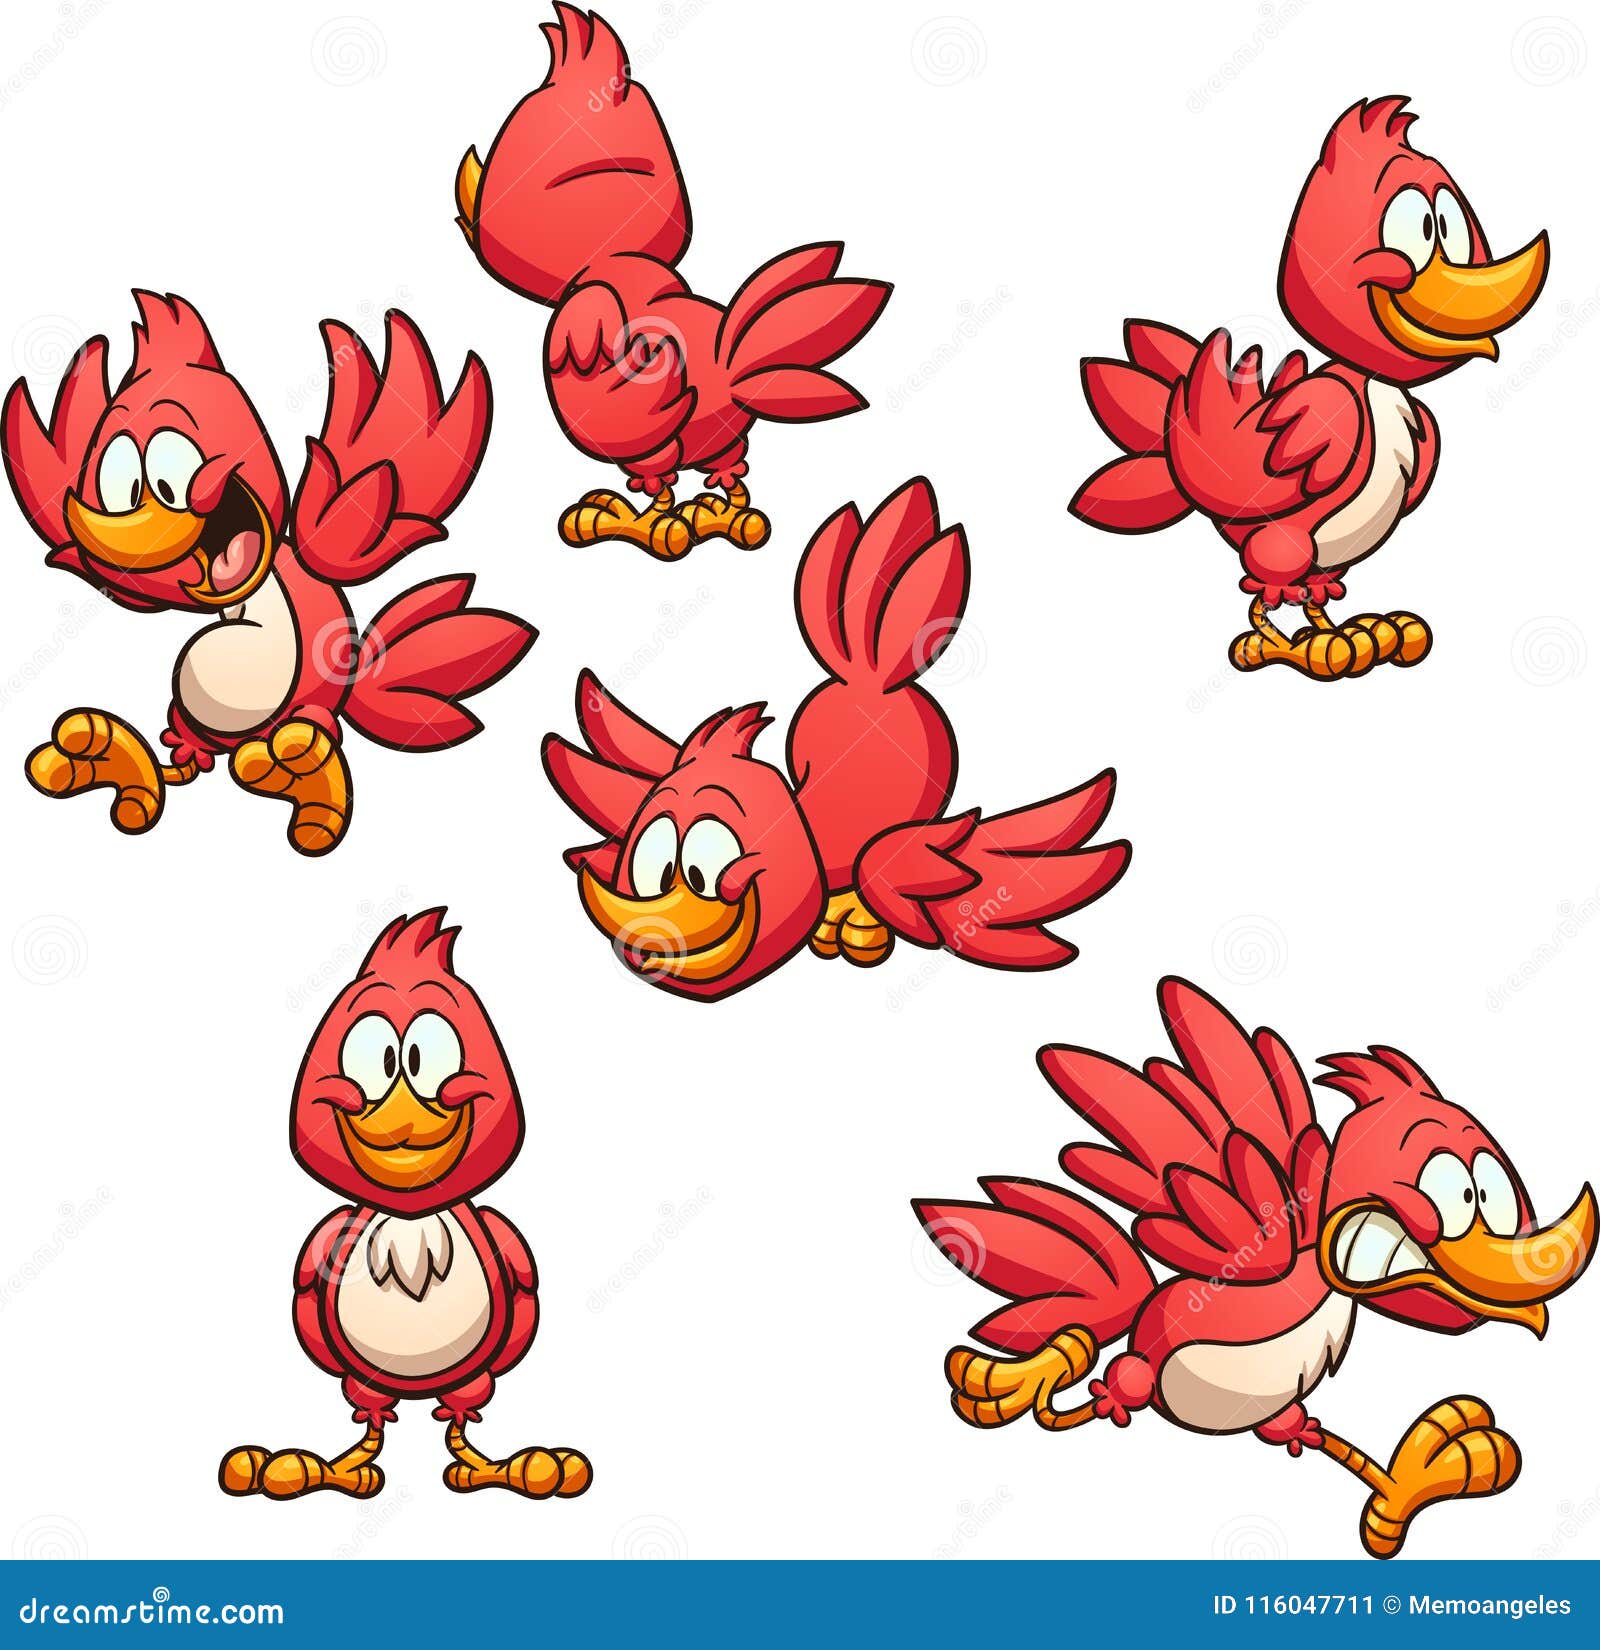 Red Bird Cartoon Illustrations – 39,506 Red Bird Cartoon Stock Vectors & - Dreamstime